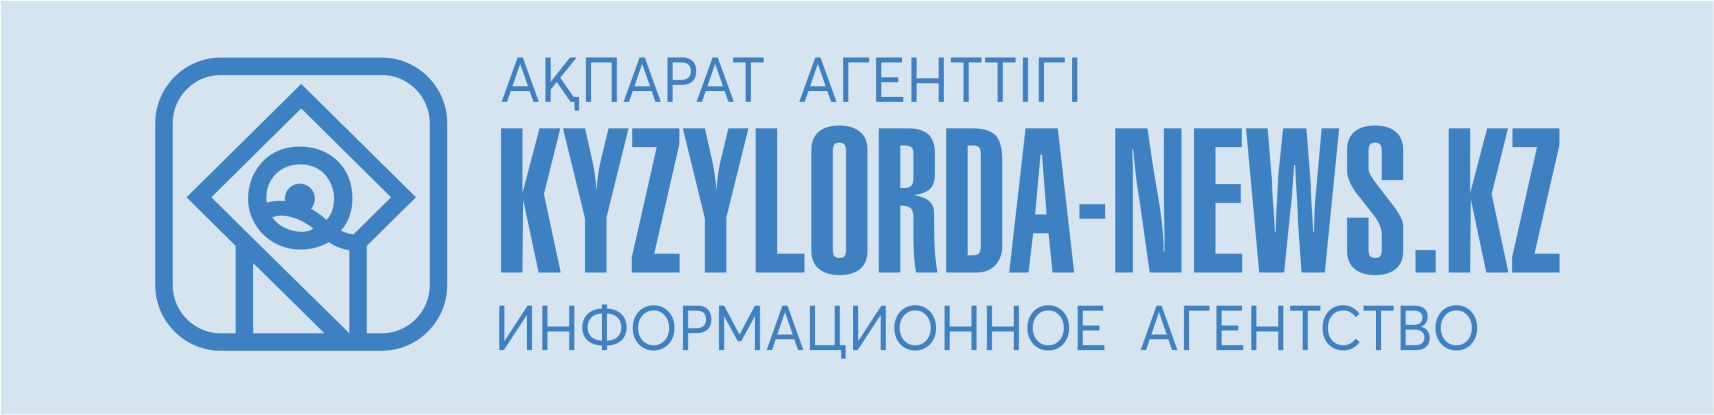 kyzylorda-news